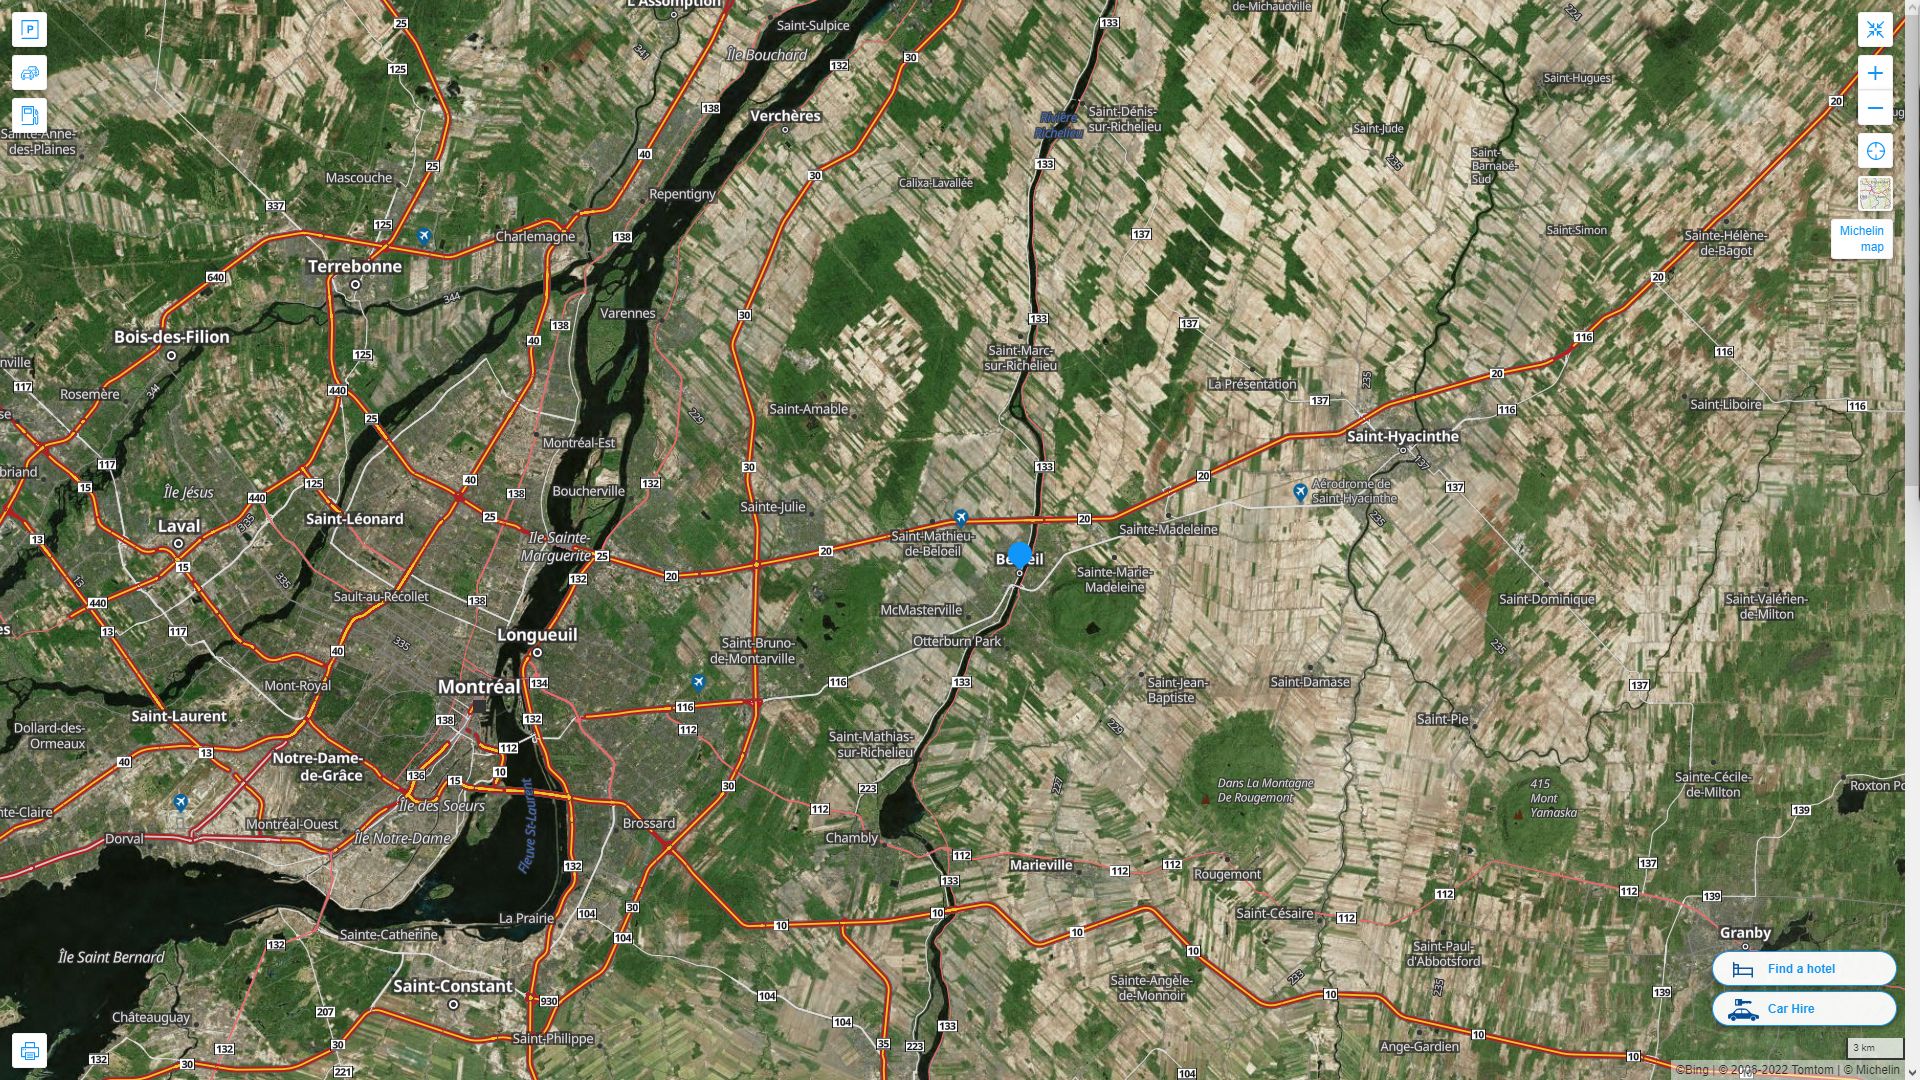 Beloeil Highway and Road Map with Satellite View